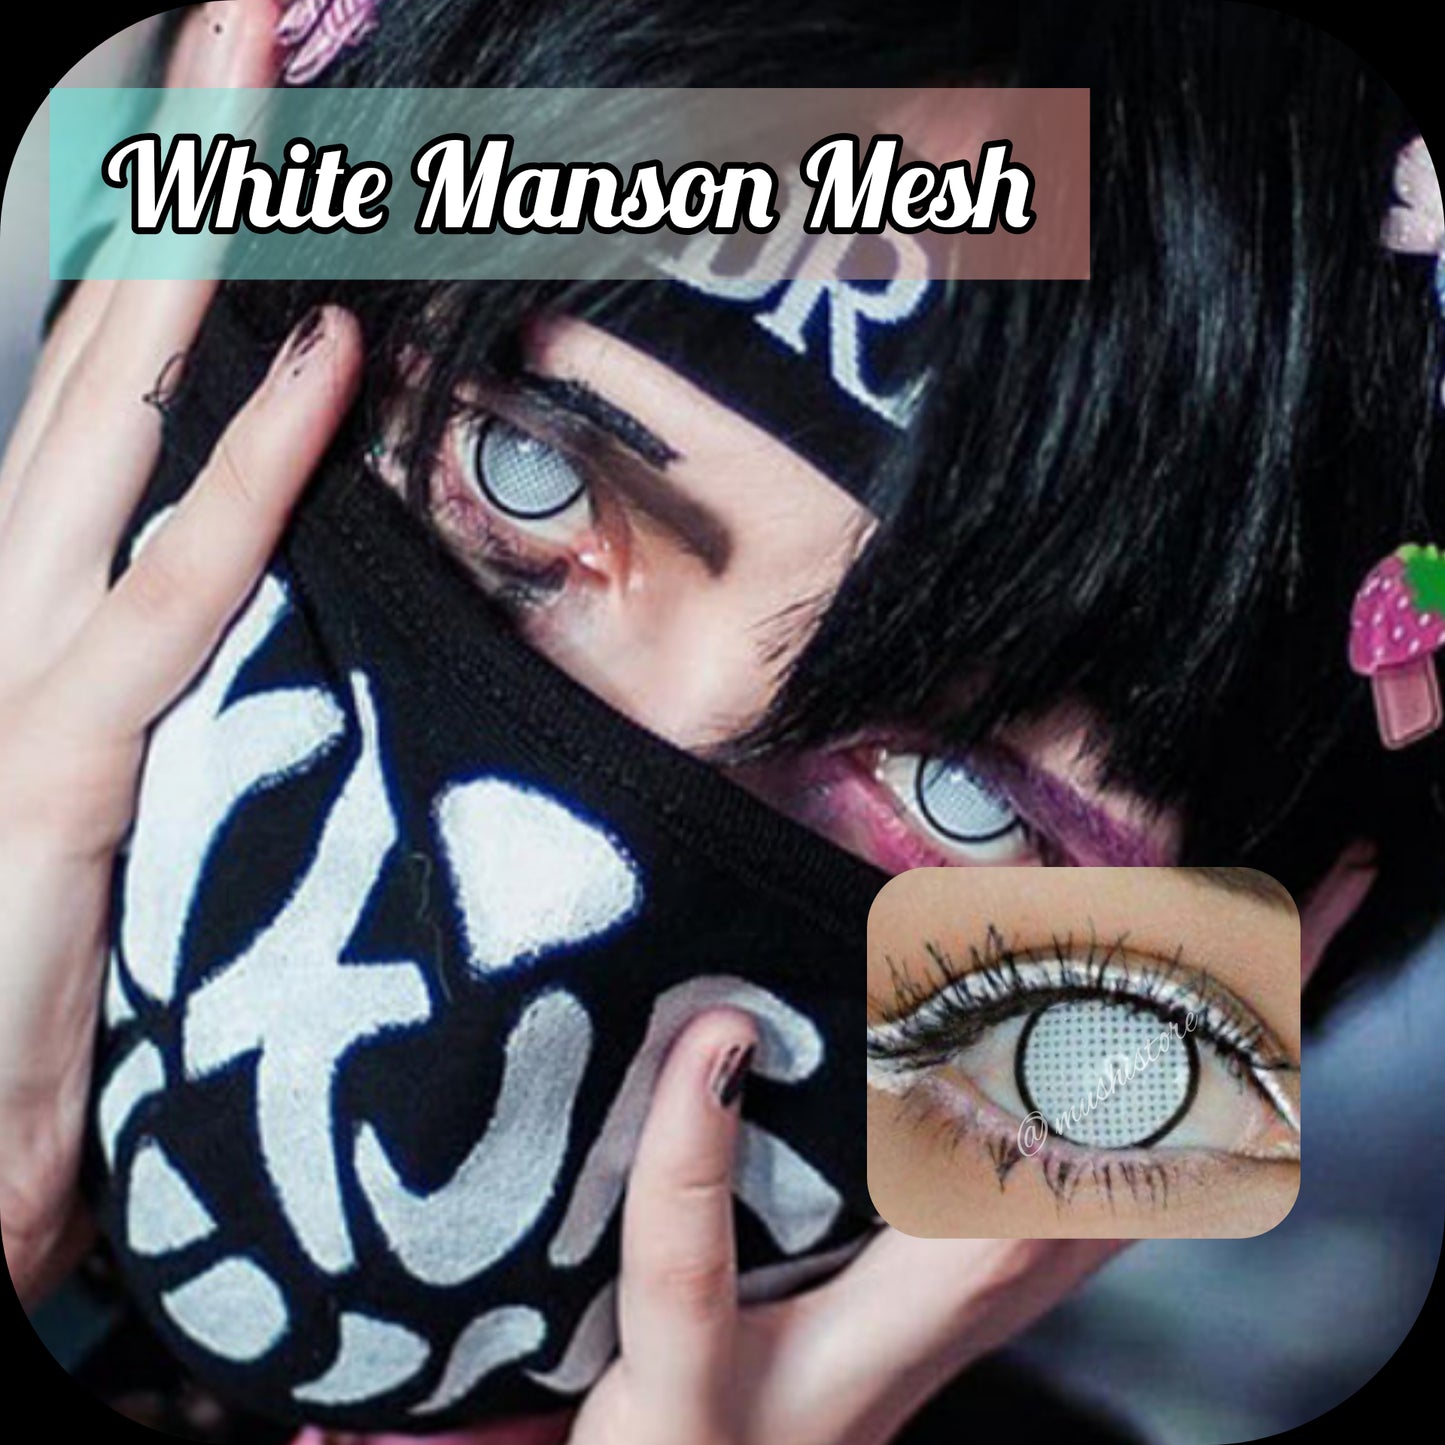 White Manson Mesh